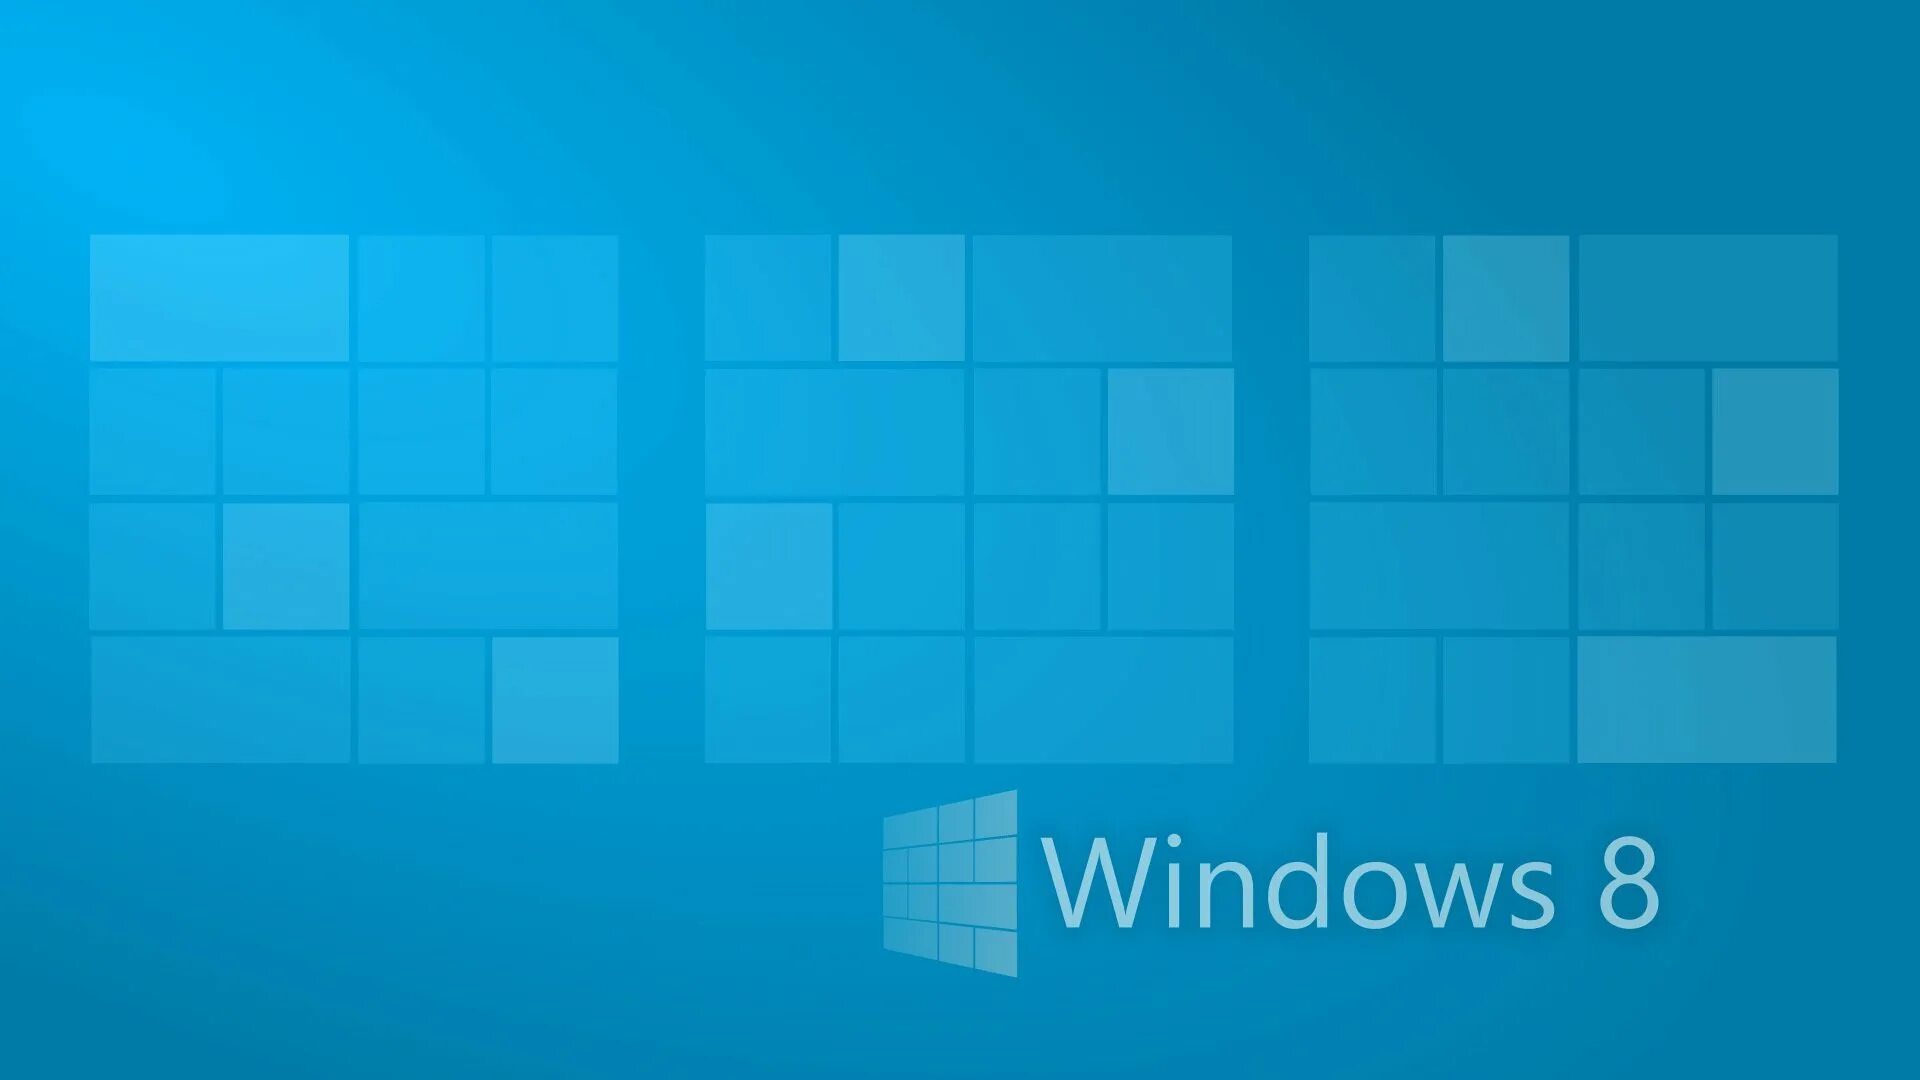 Best windows. Обои Windows 8. Обои на ПК Windows 8.1. Обои вин 8.1. Фон рабочего стола виндовс 8.1.